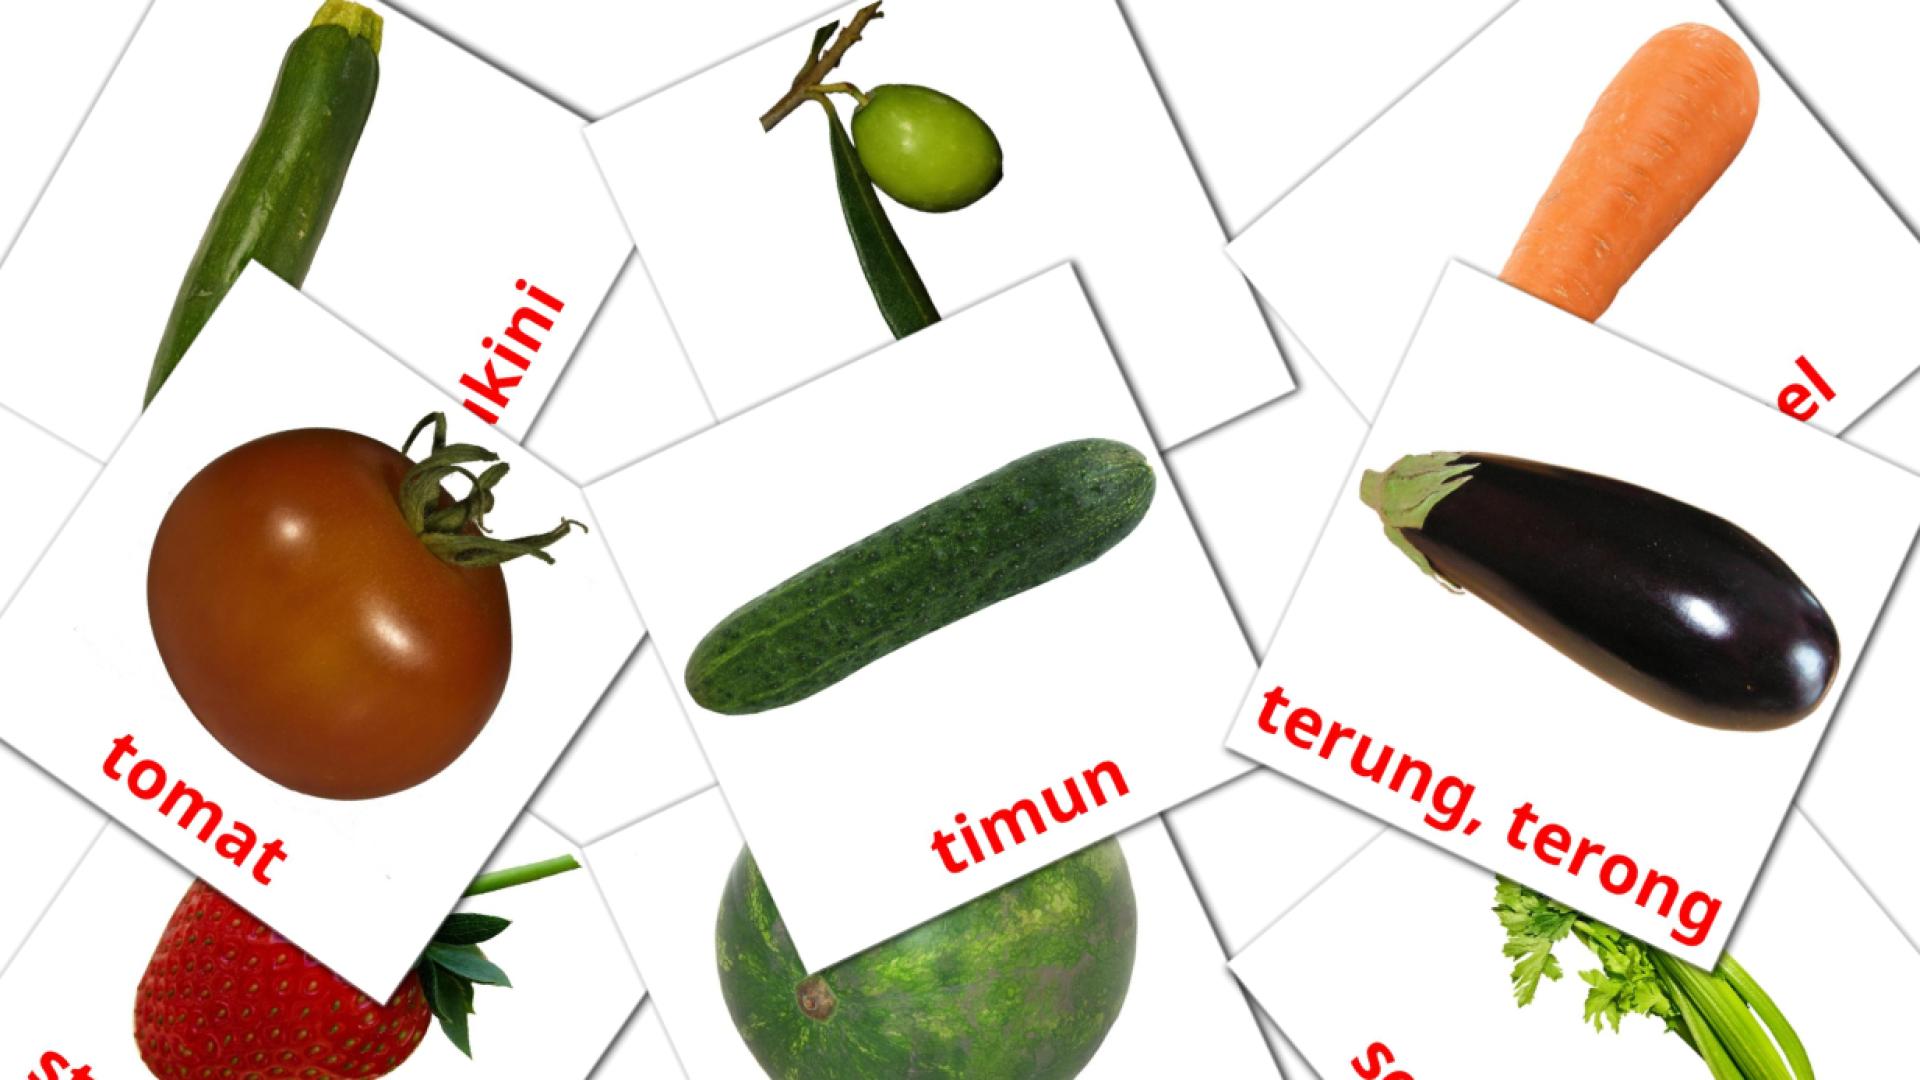 Buah - buahan indonesisch woordenschat flashcards